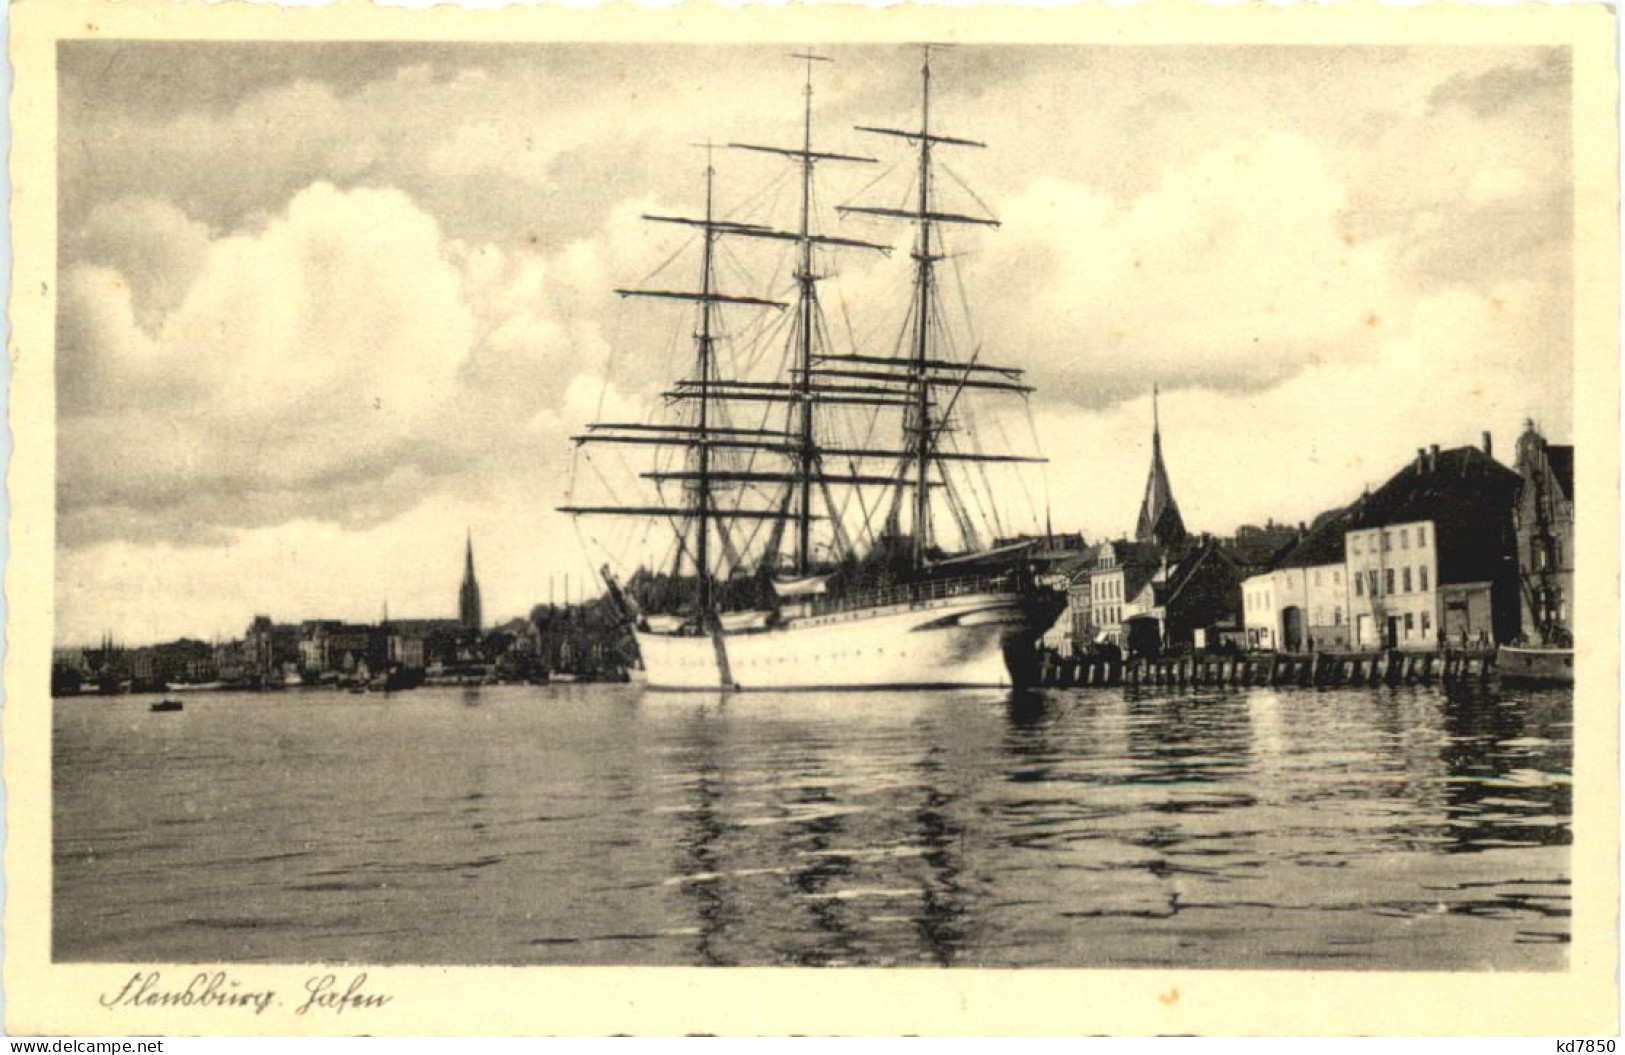 Flensburg - Hafen - Flensburg